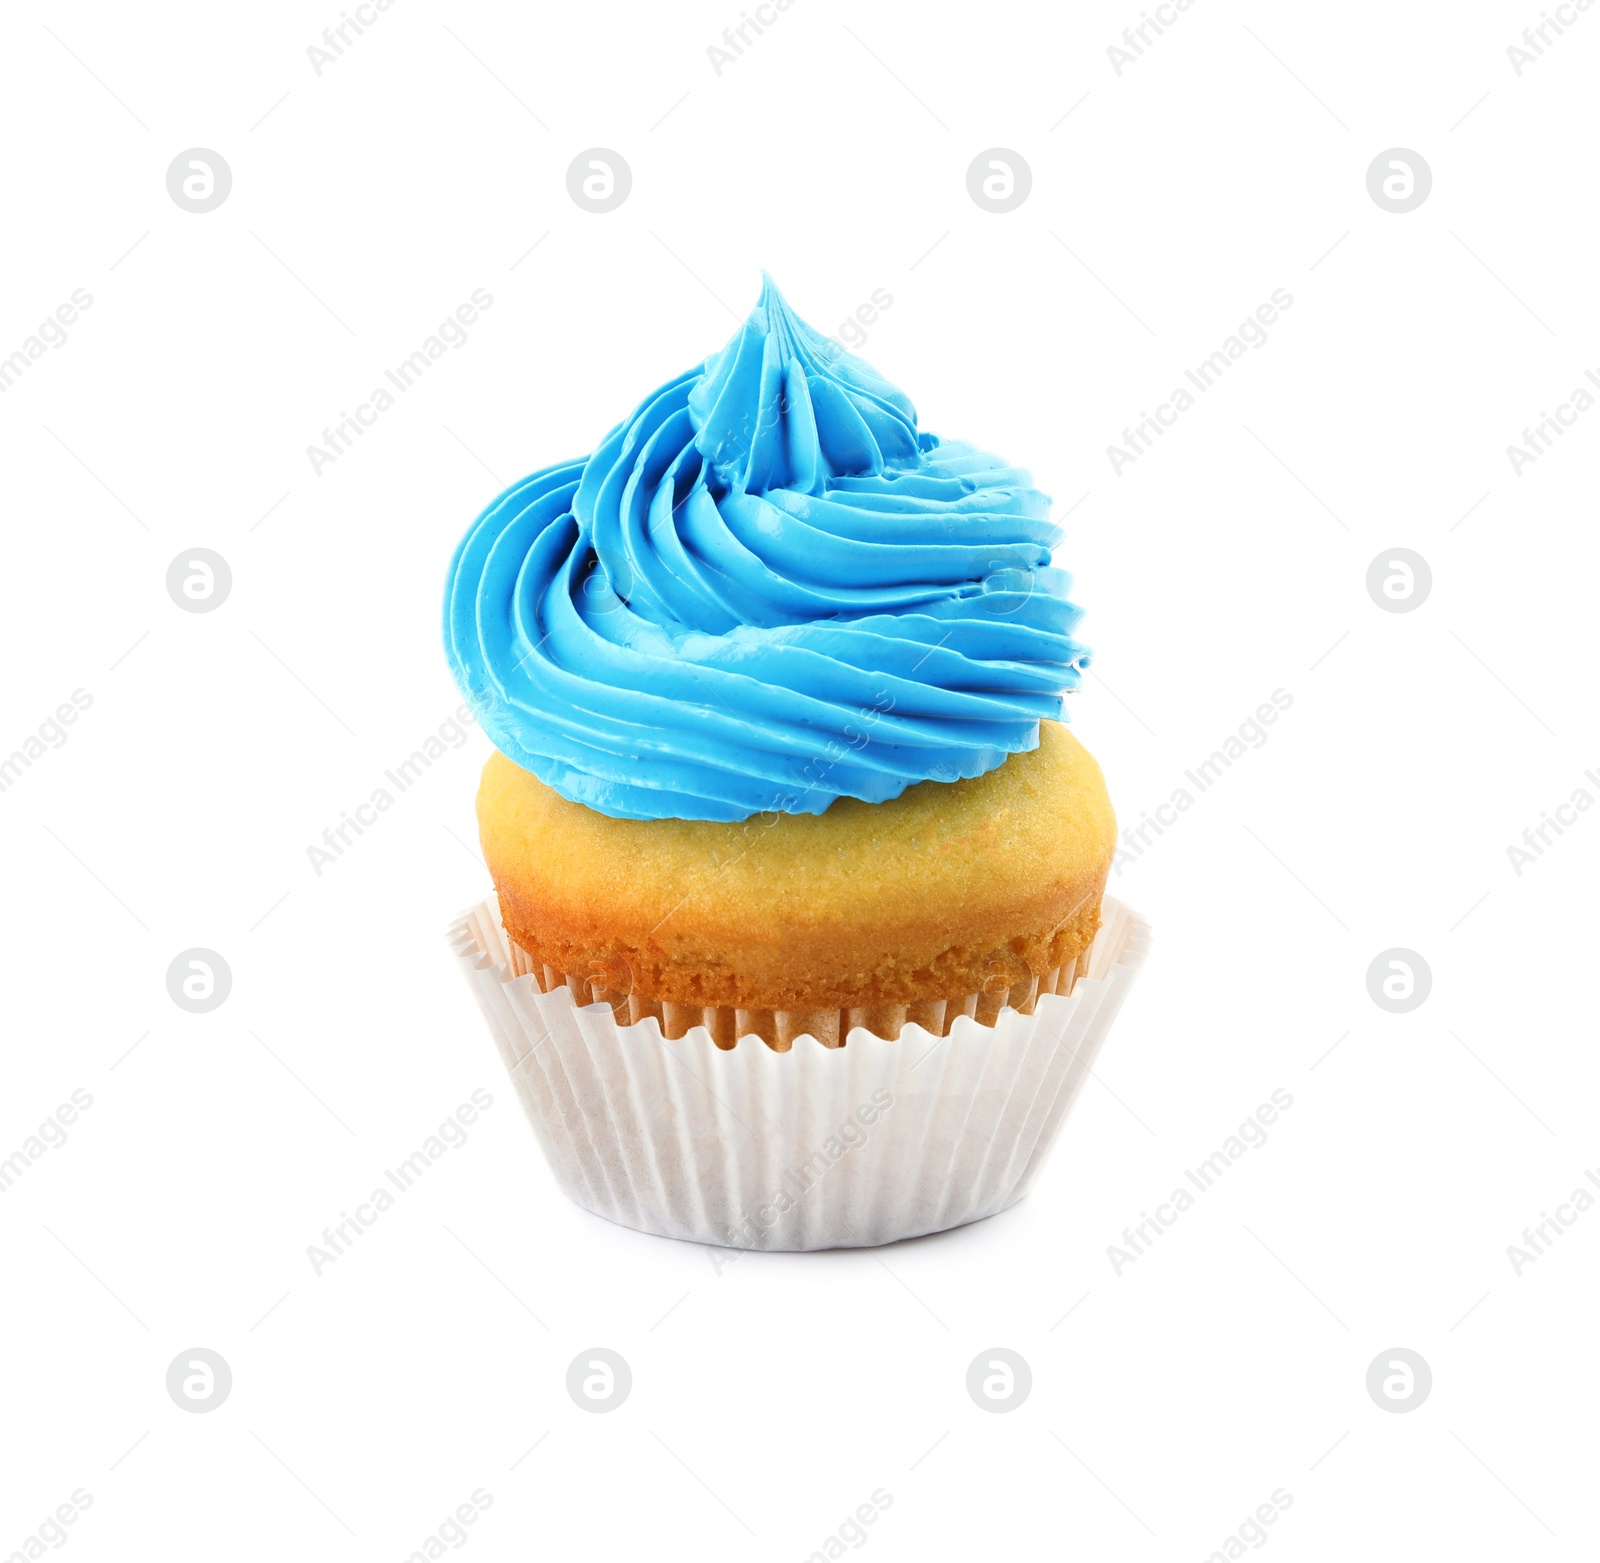 Photo of Tasty birthday cupcake with cream on white background